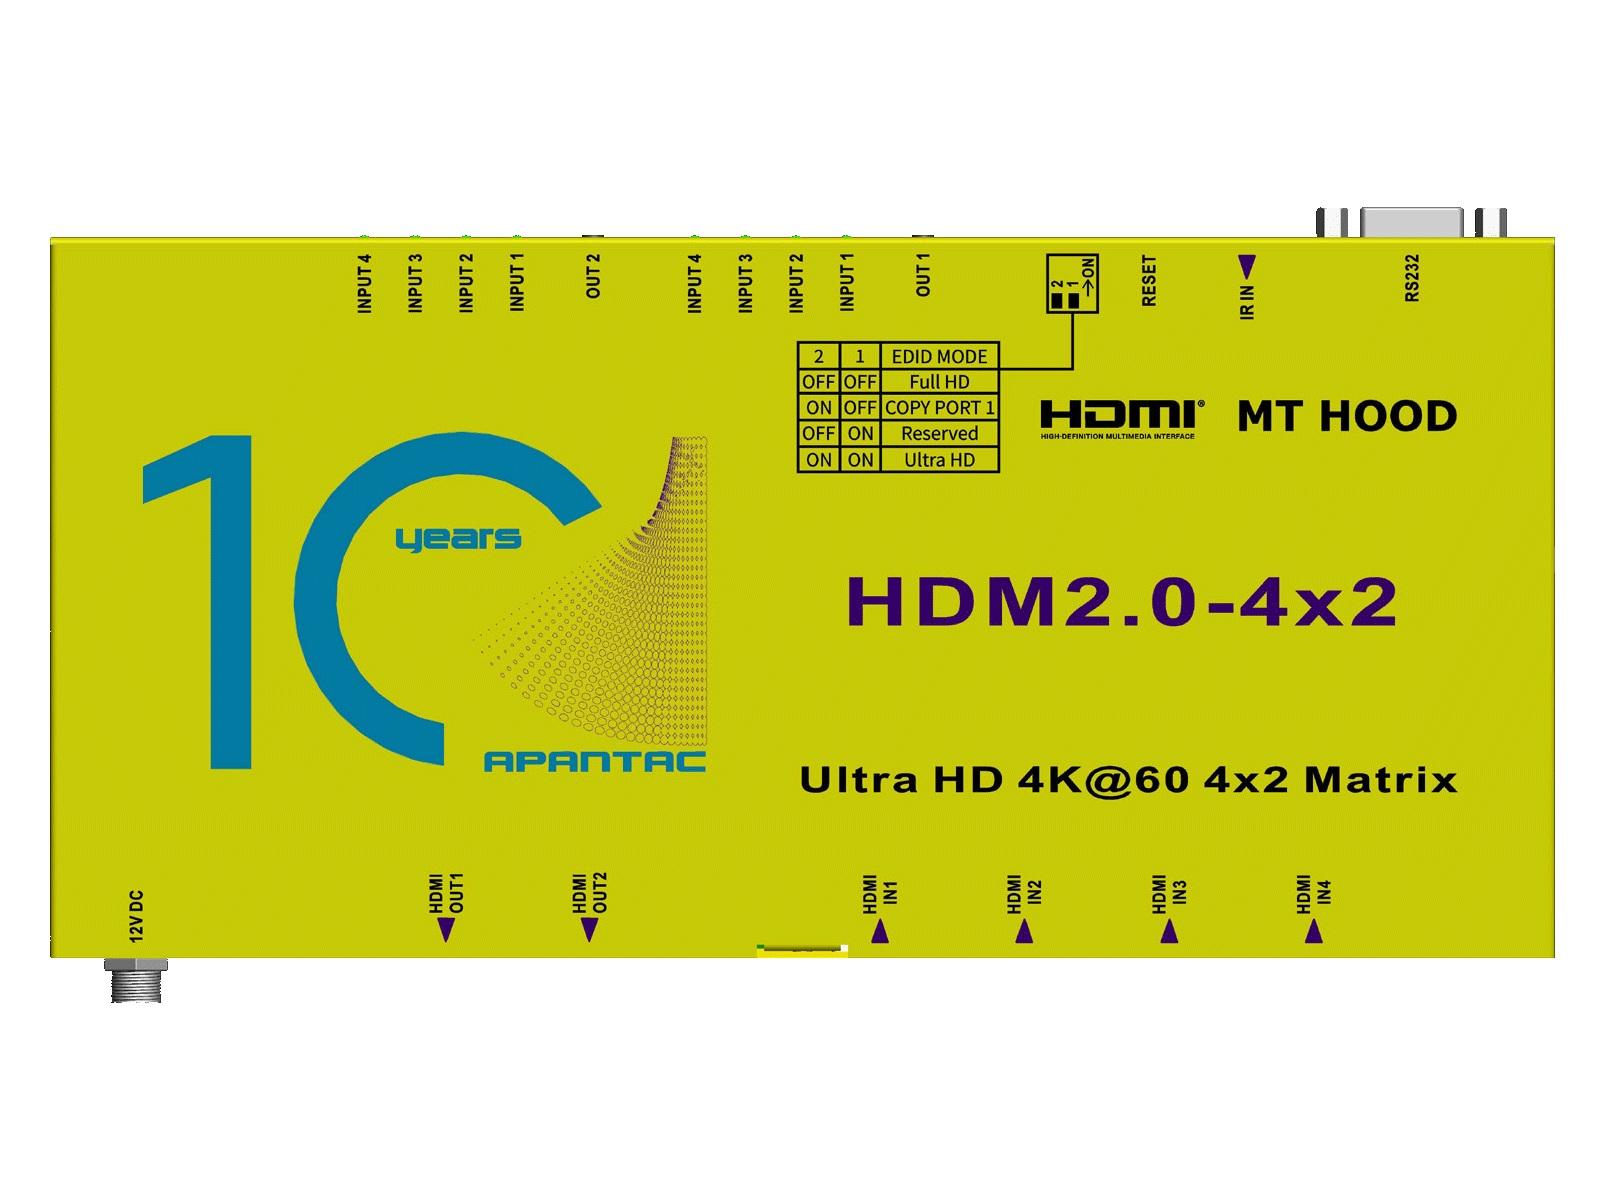 Apantac HDM2.0-4x2-UHD 4x2 1 RU HDMI 2.0 Matrix Switch with IR and RS232 control